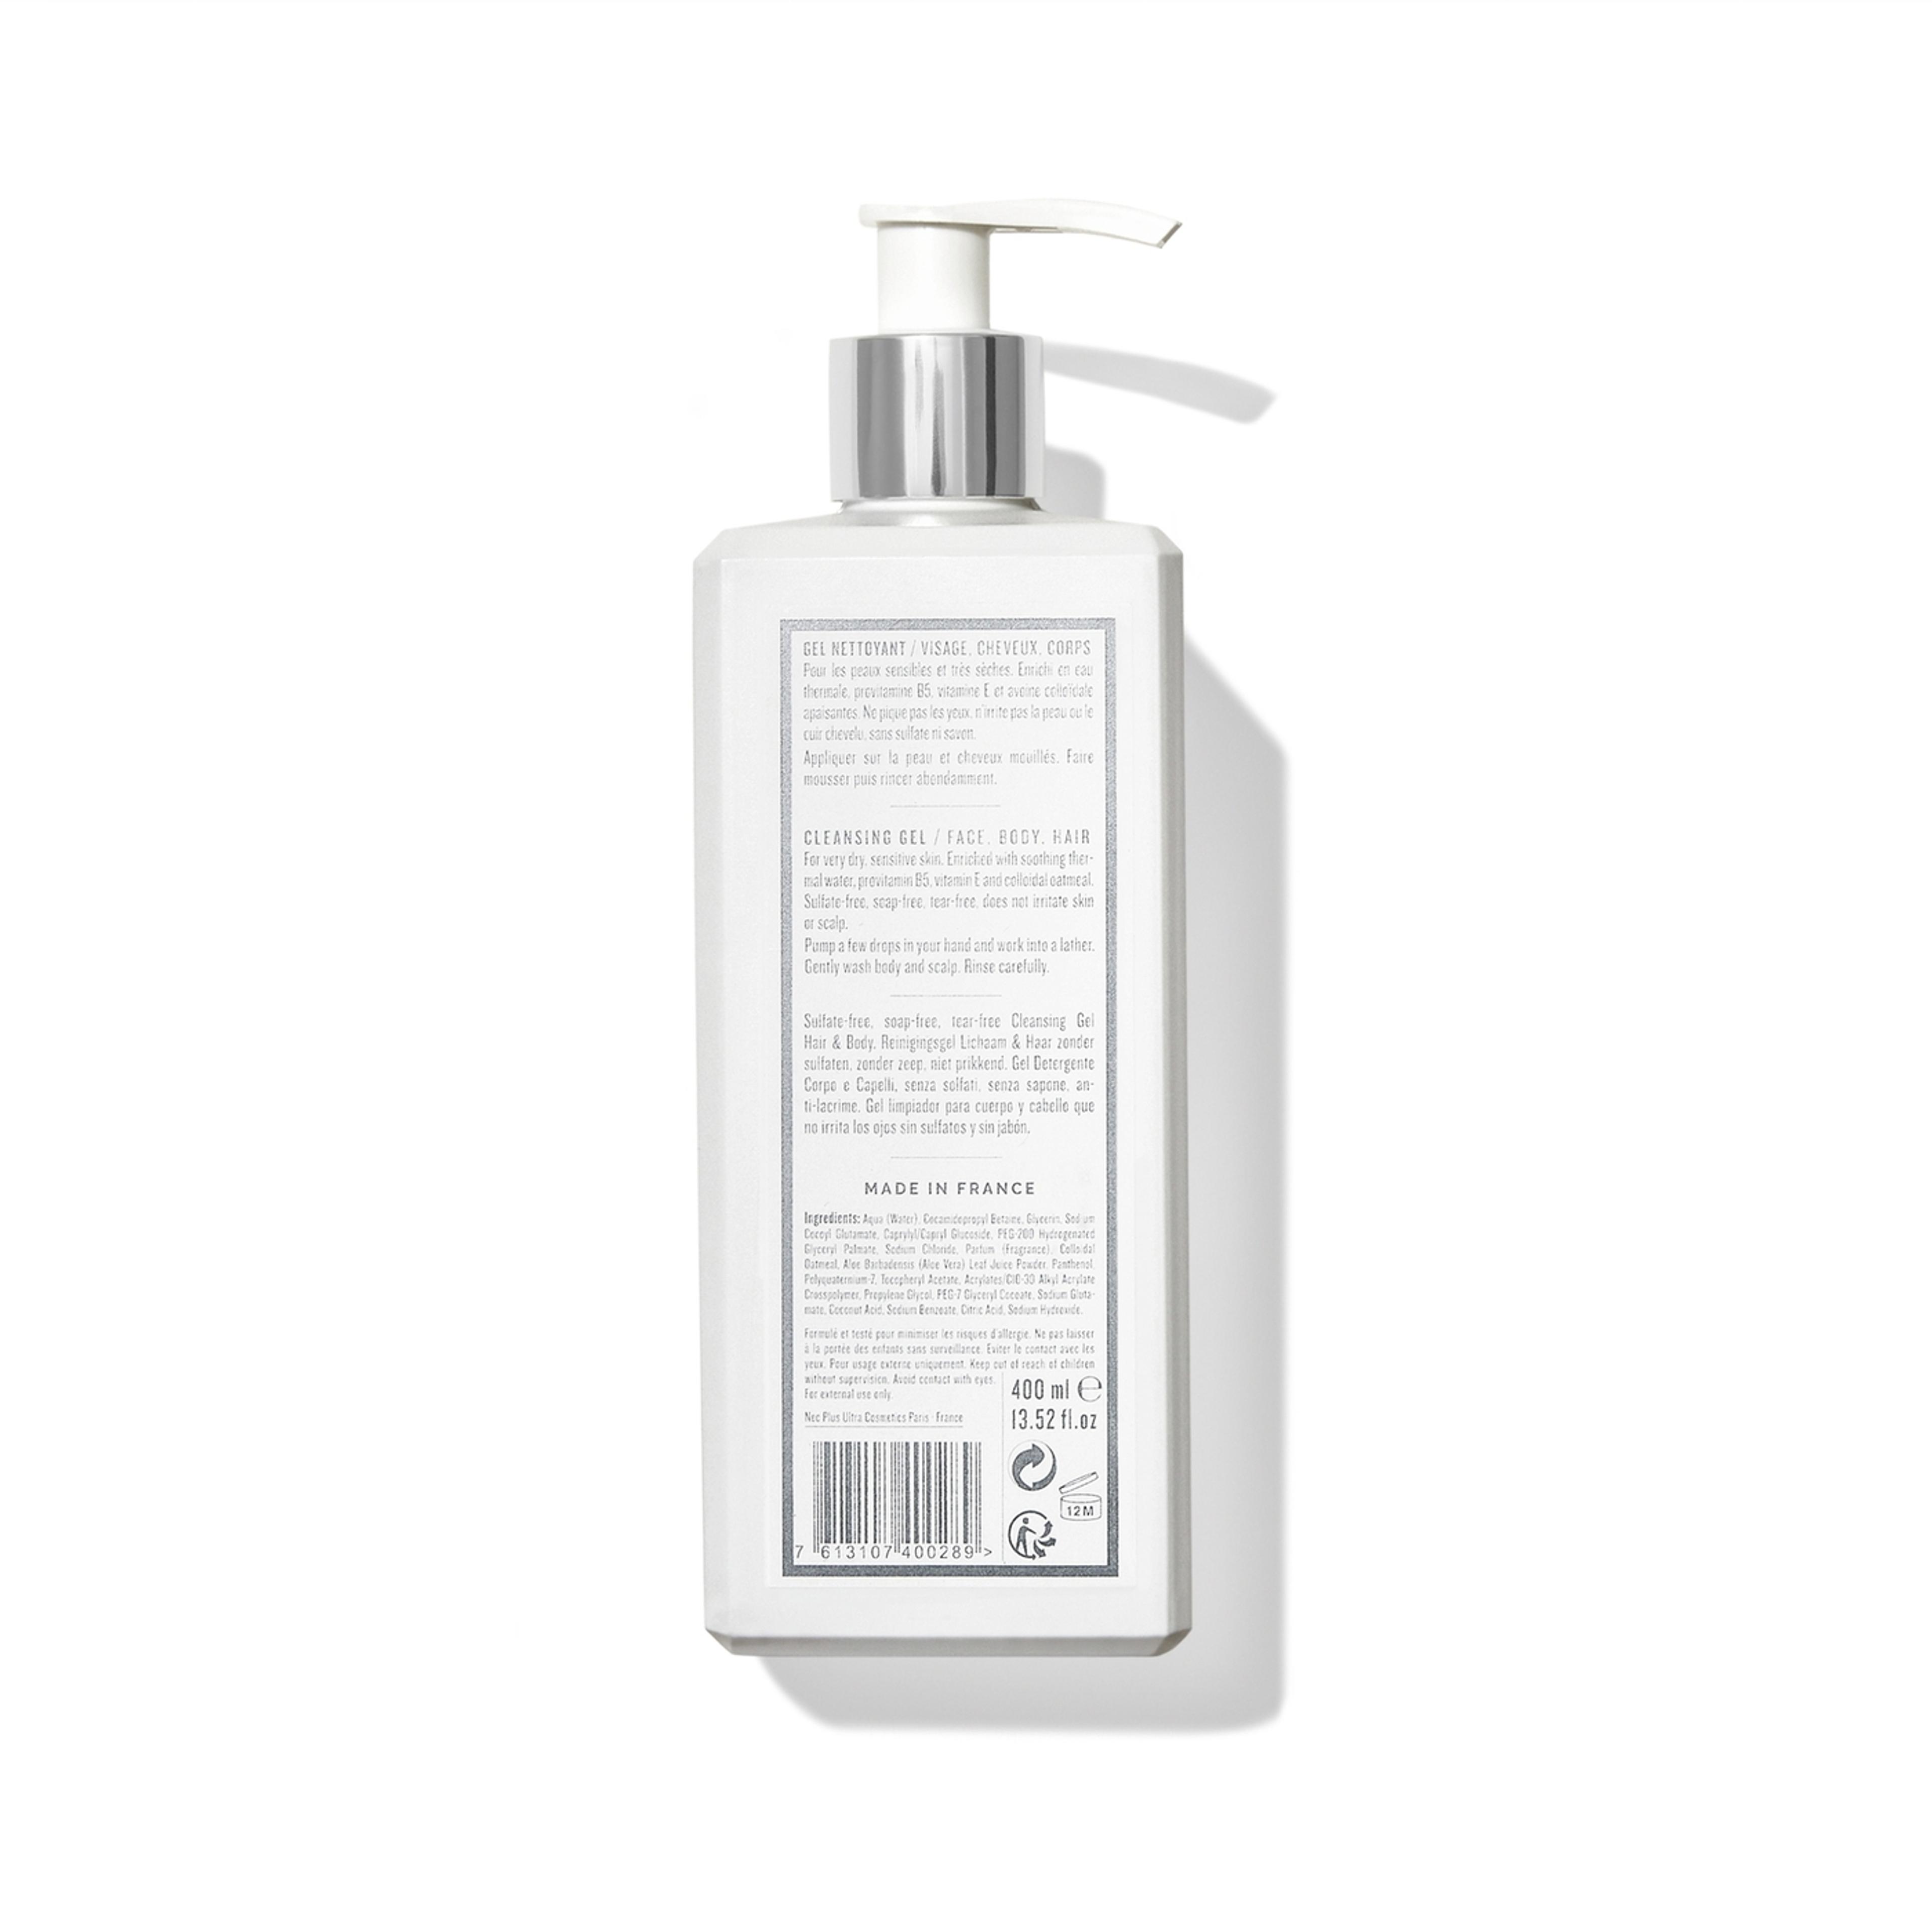 Hair and body cleansing gel 400 ml | Jacadi Paris